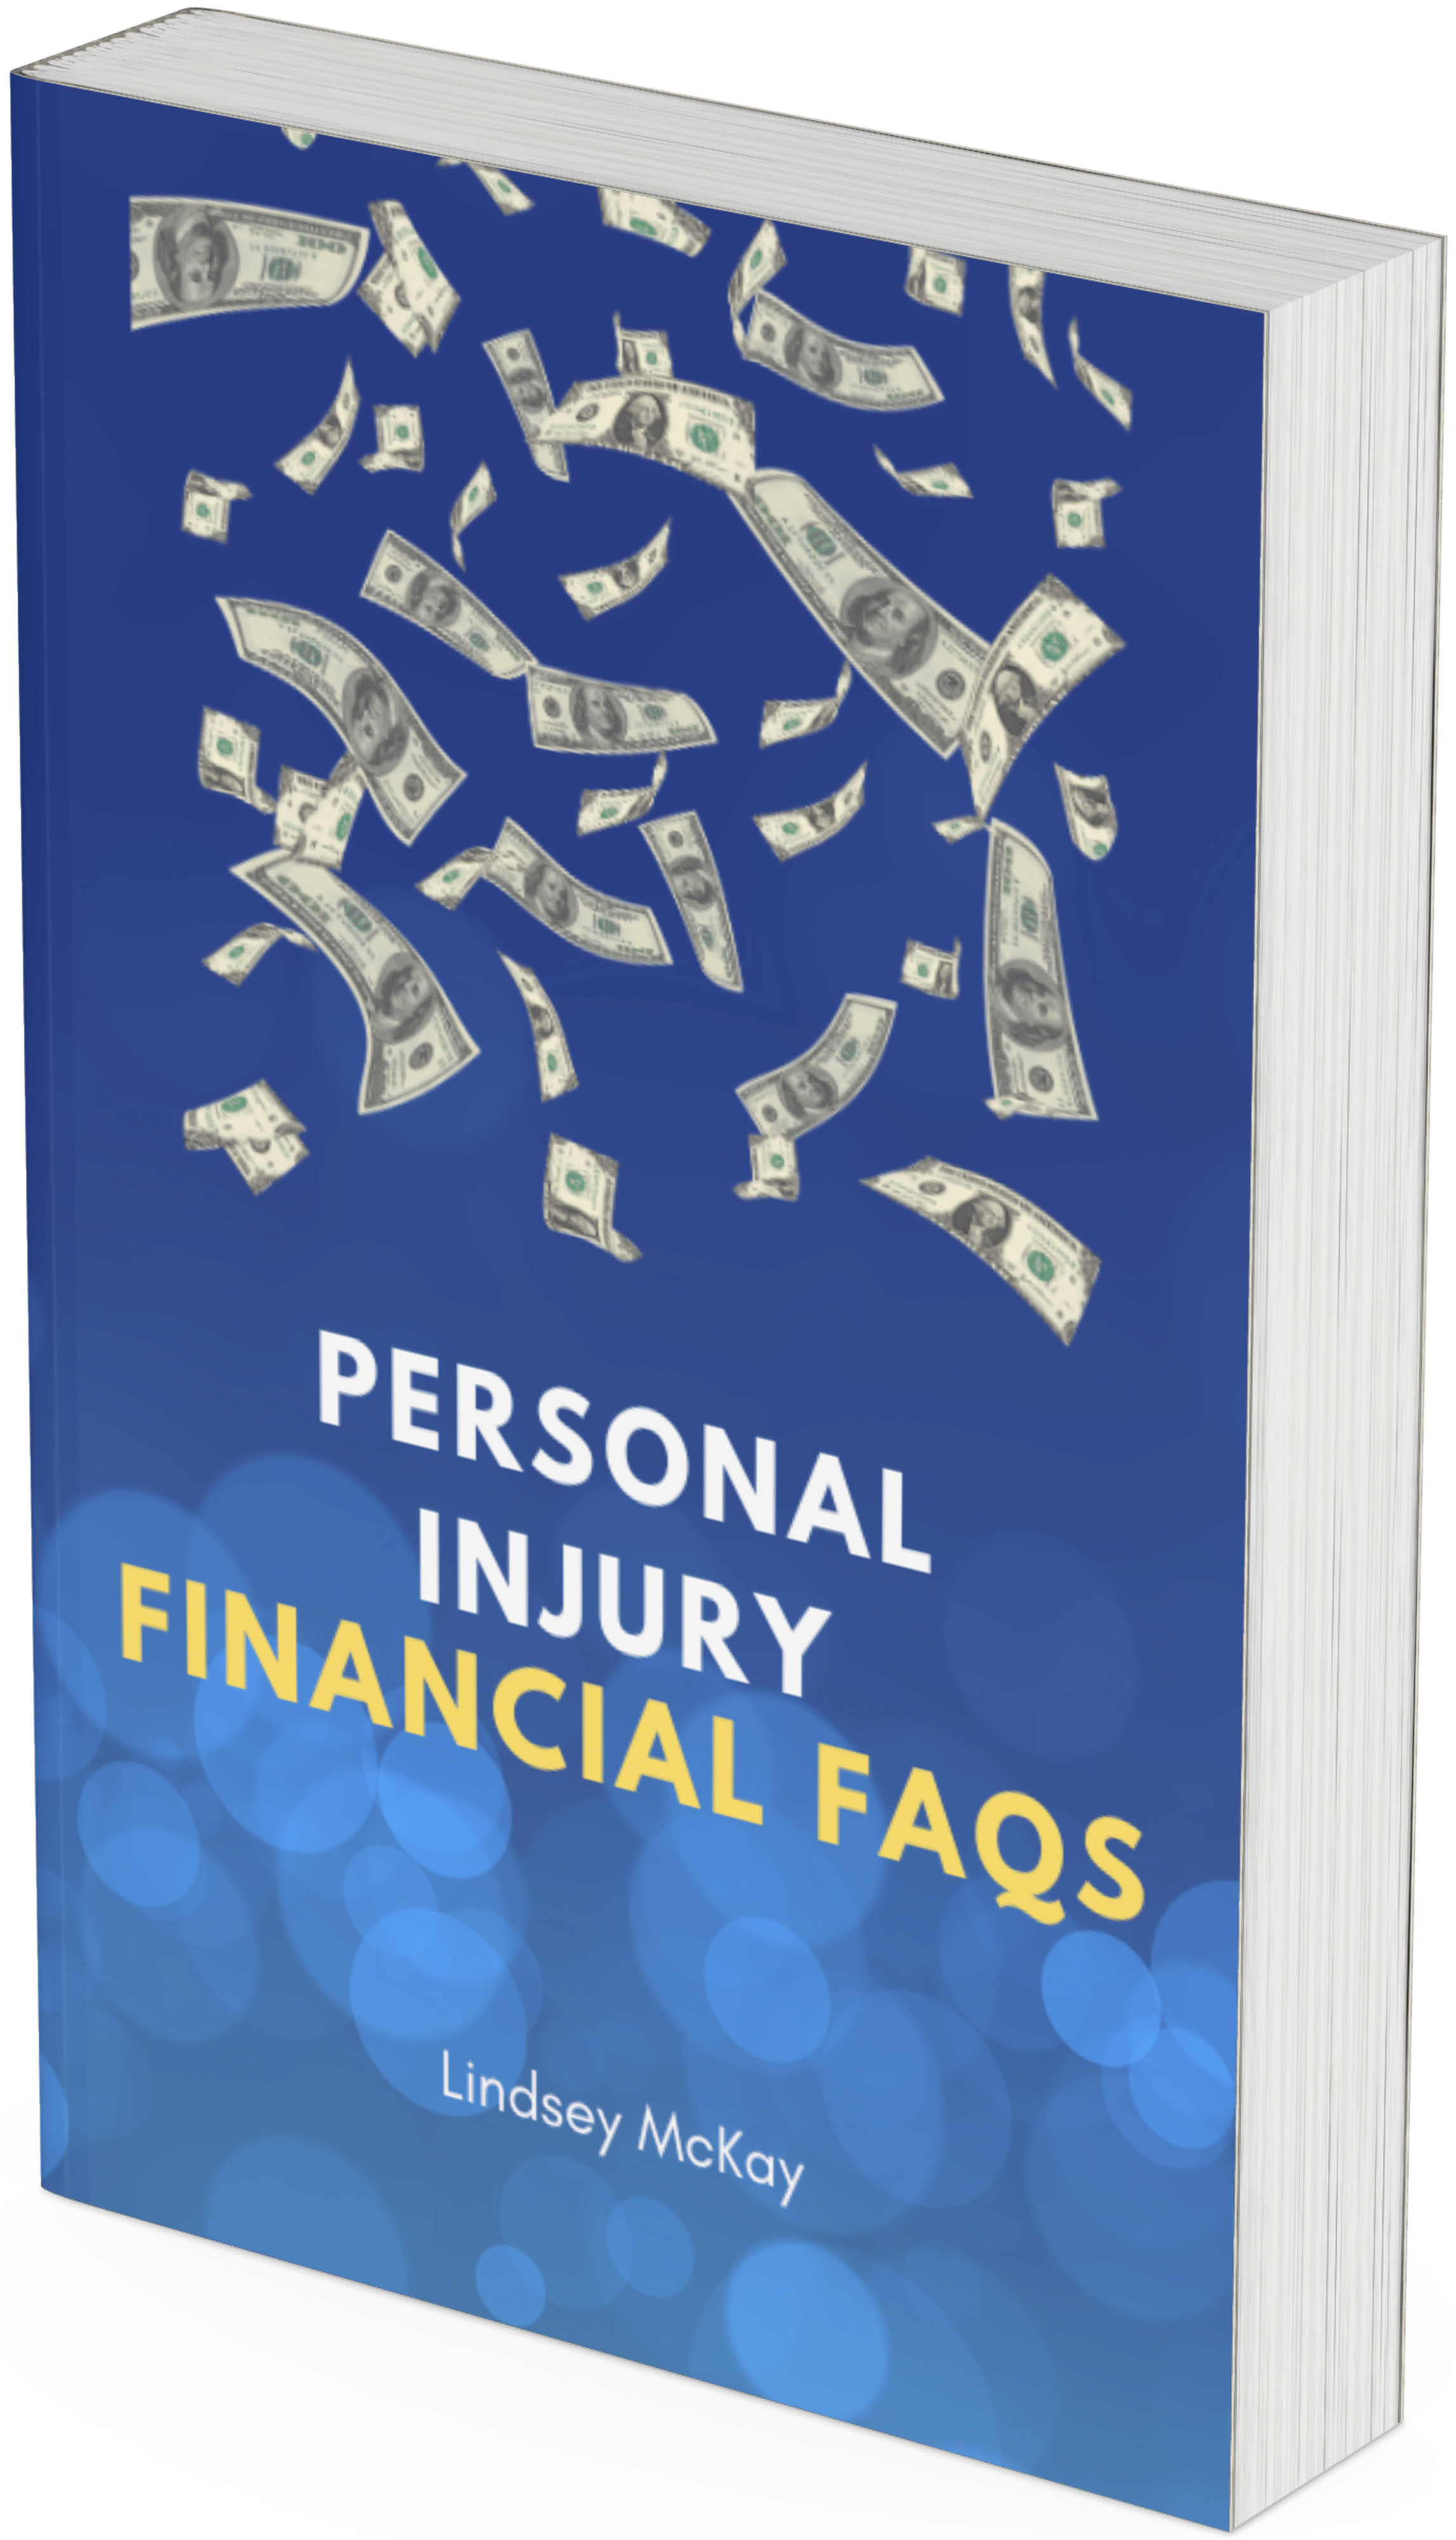 Personal Injury Financial FAQs​